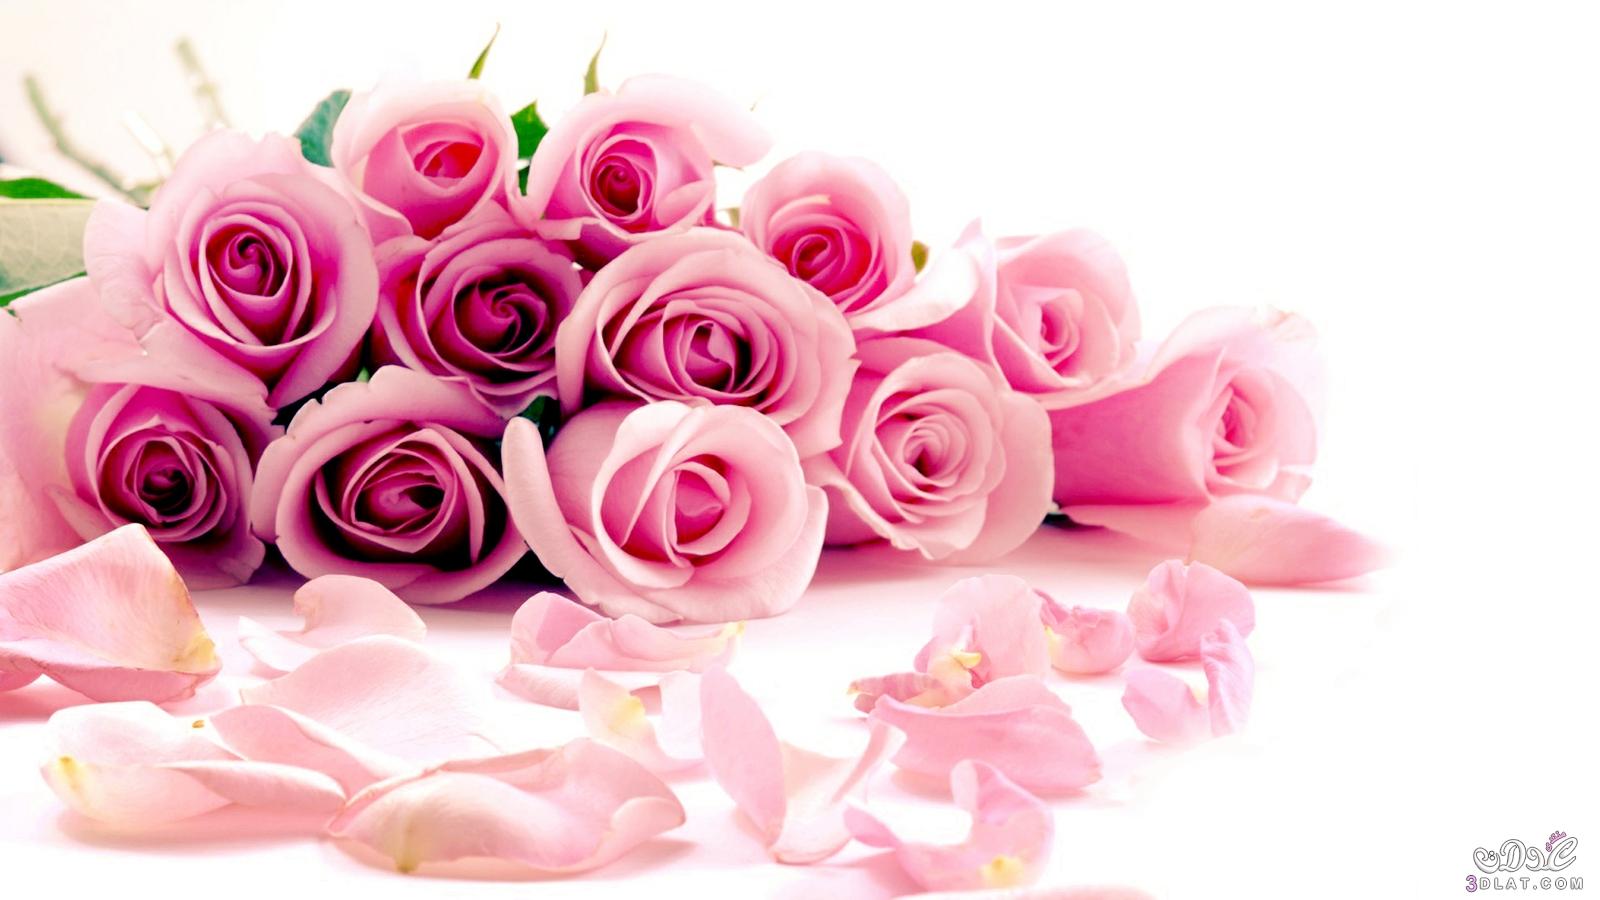 Pink flawer 2024, اجمل ورد روز2024,احدث تشكيله ورد وزهور بينك 2024, باقات ورد وخلفيات زهور بينك2024